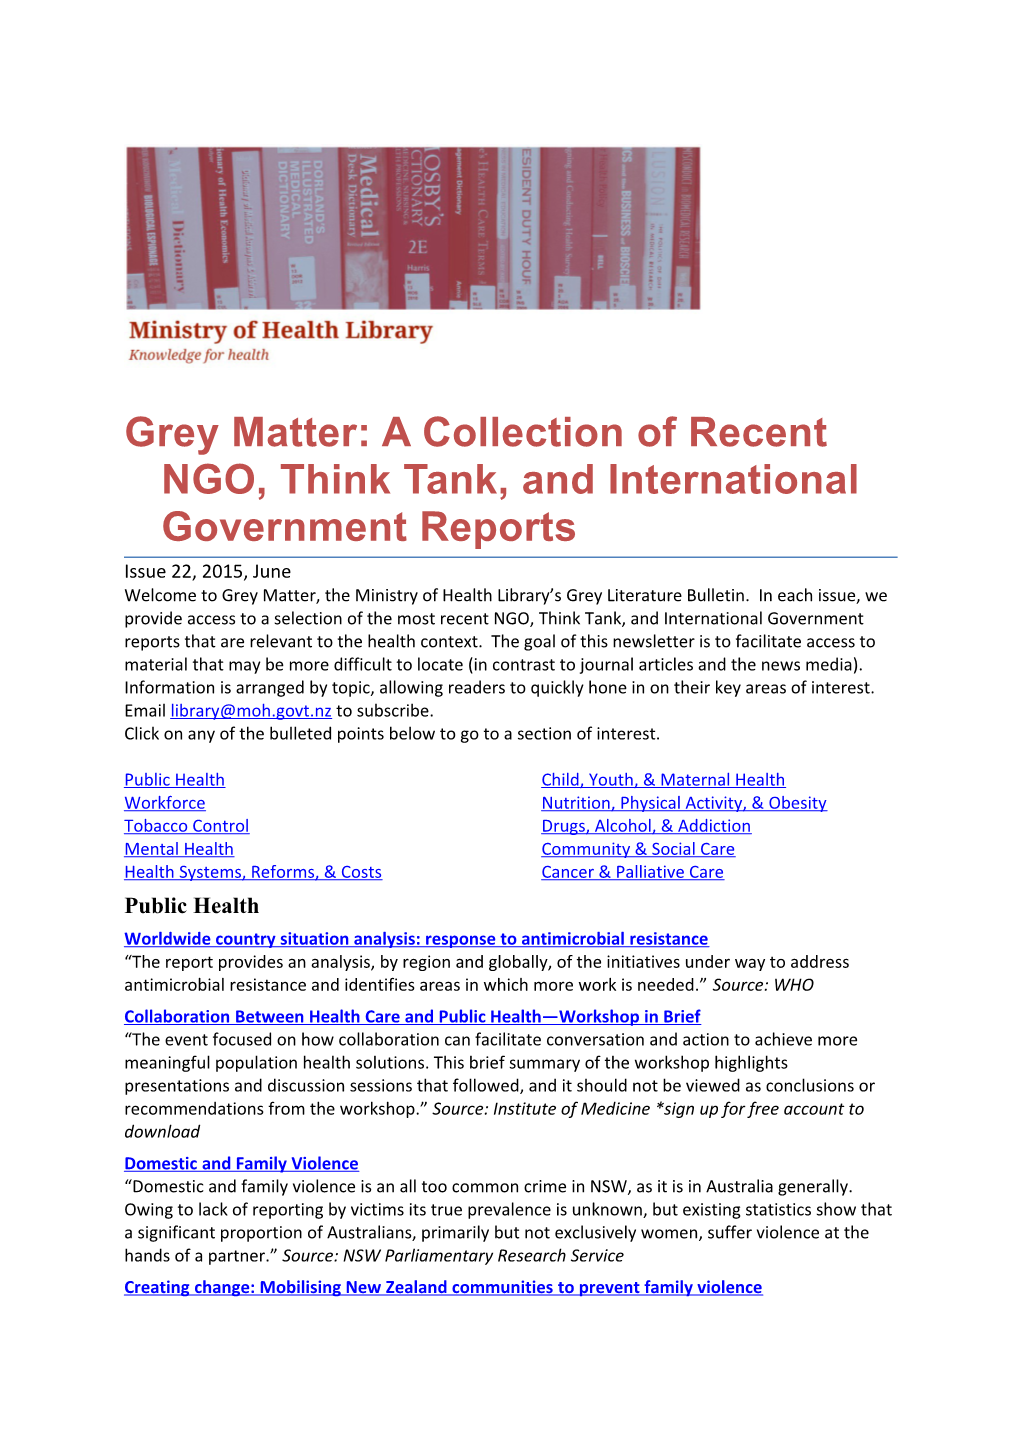 Grey Matter, Issue 22, June 2015